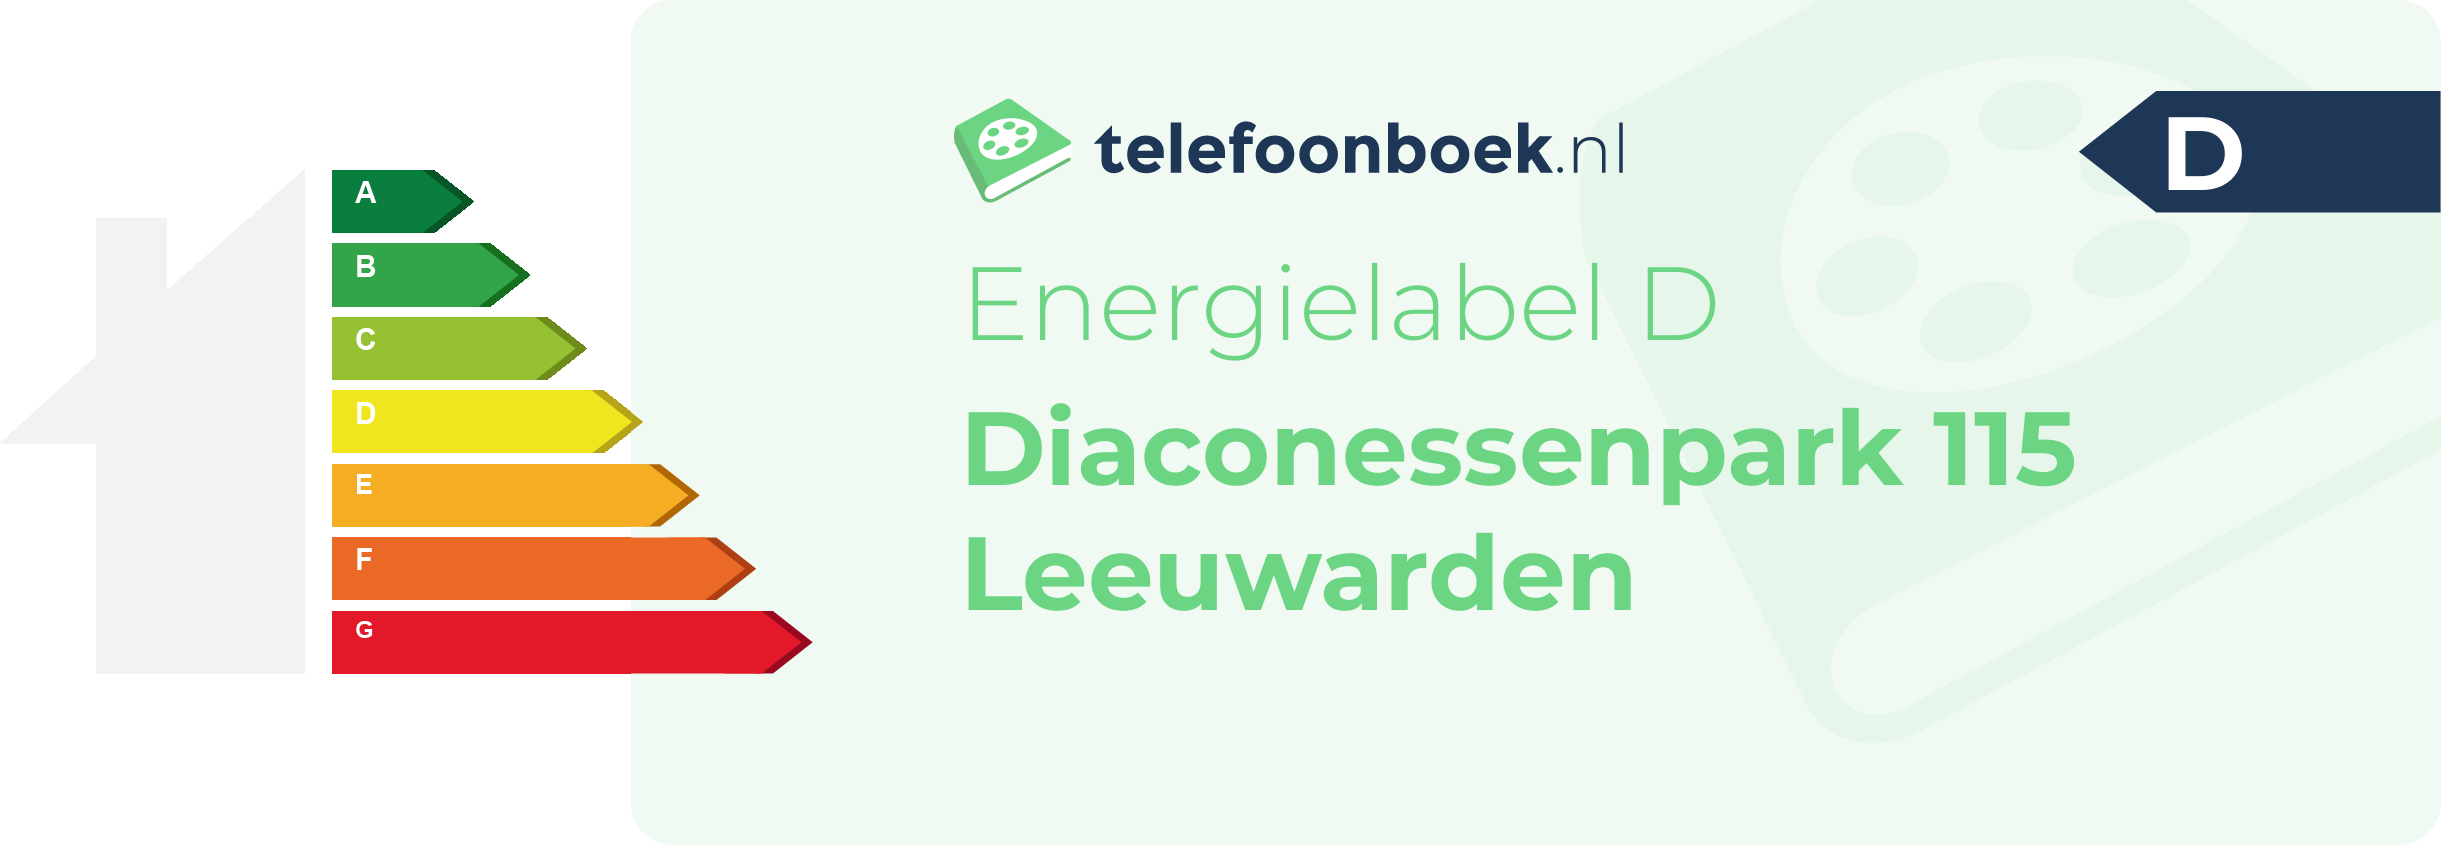 Energielabel Diaconessenpark 115 Leeuwarden